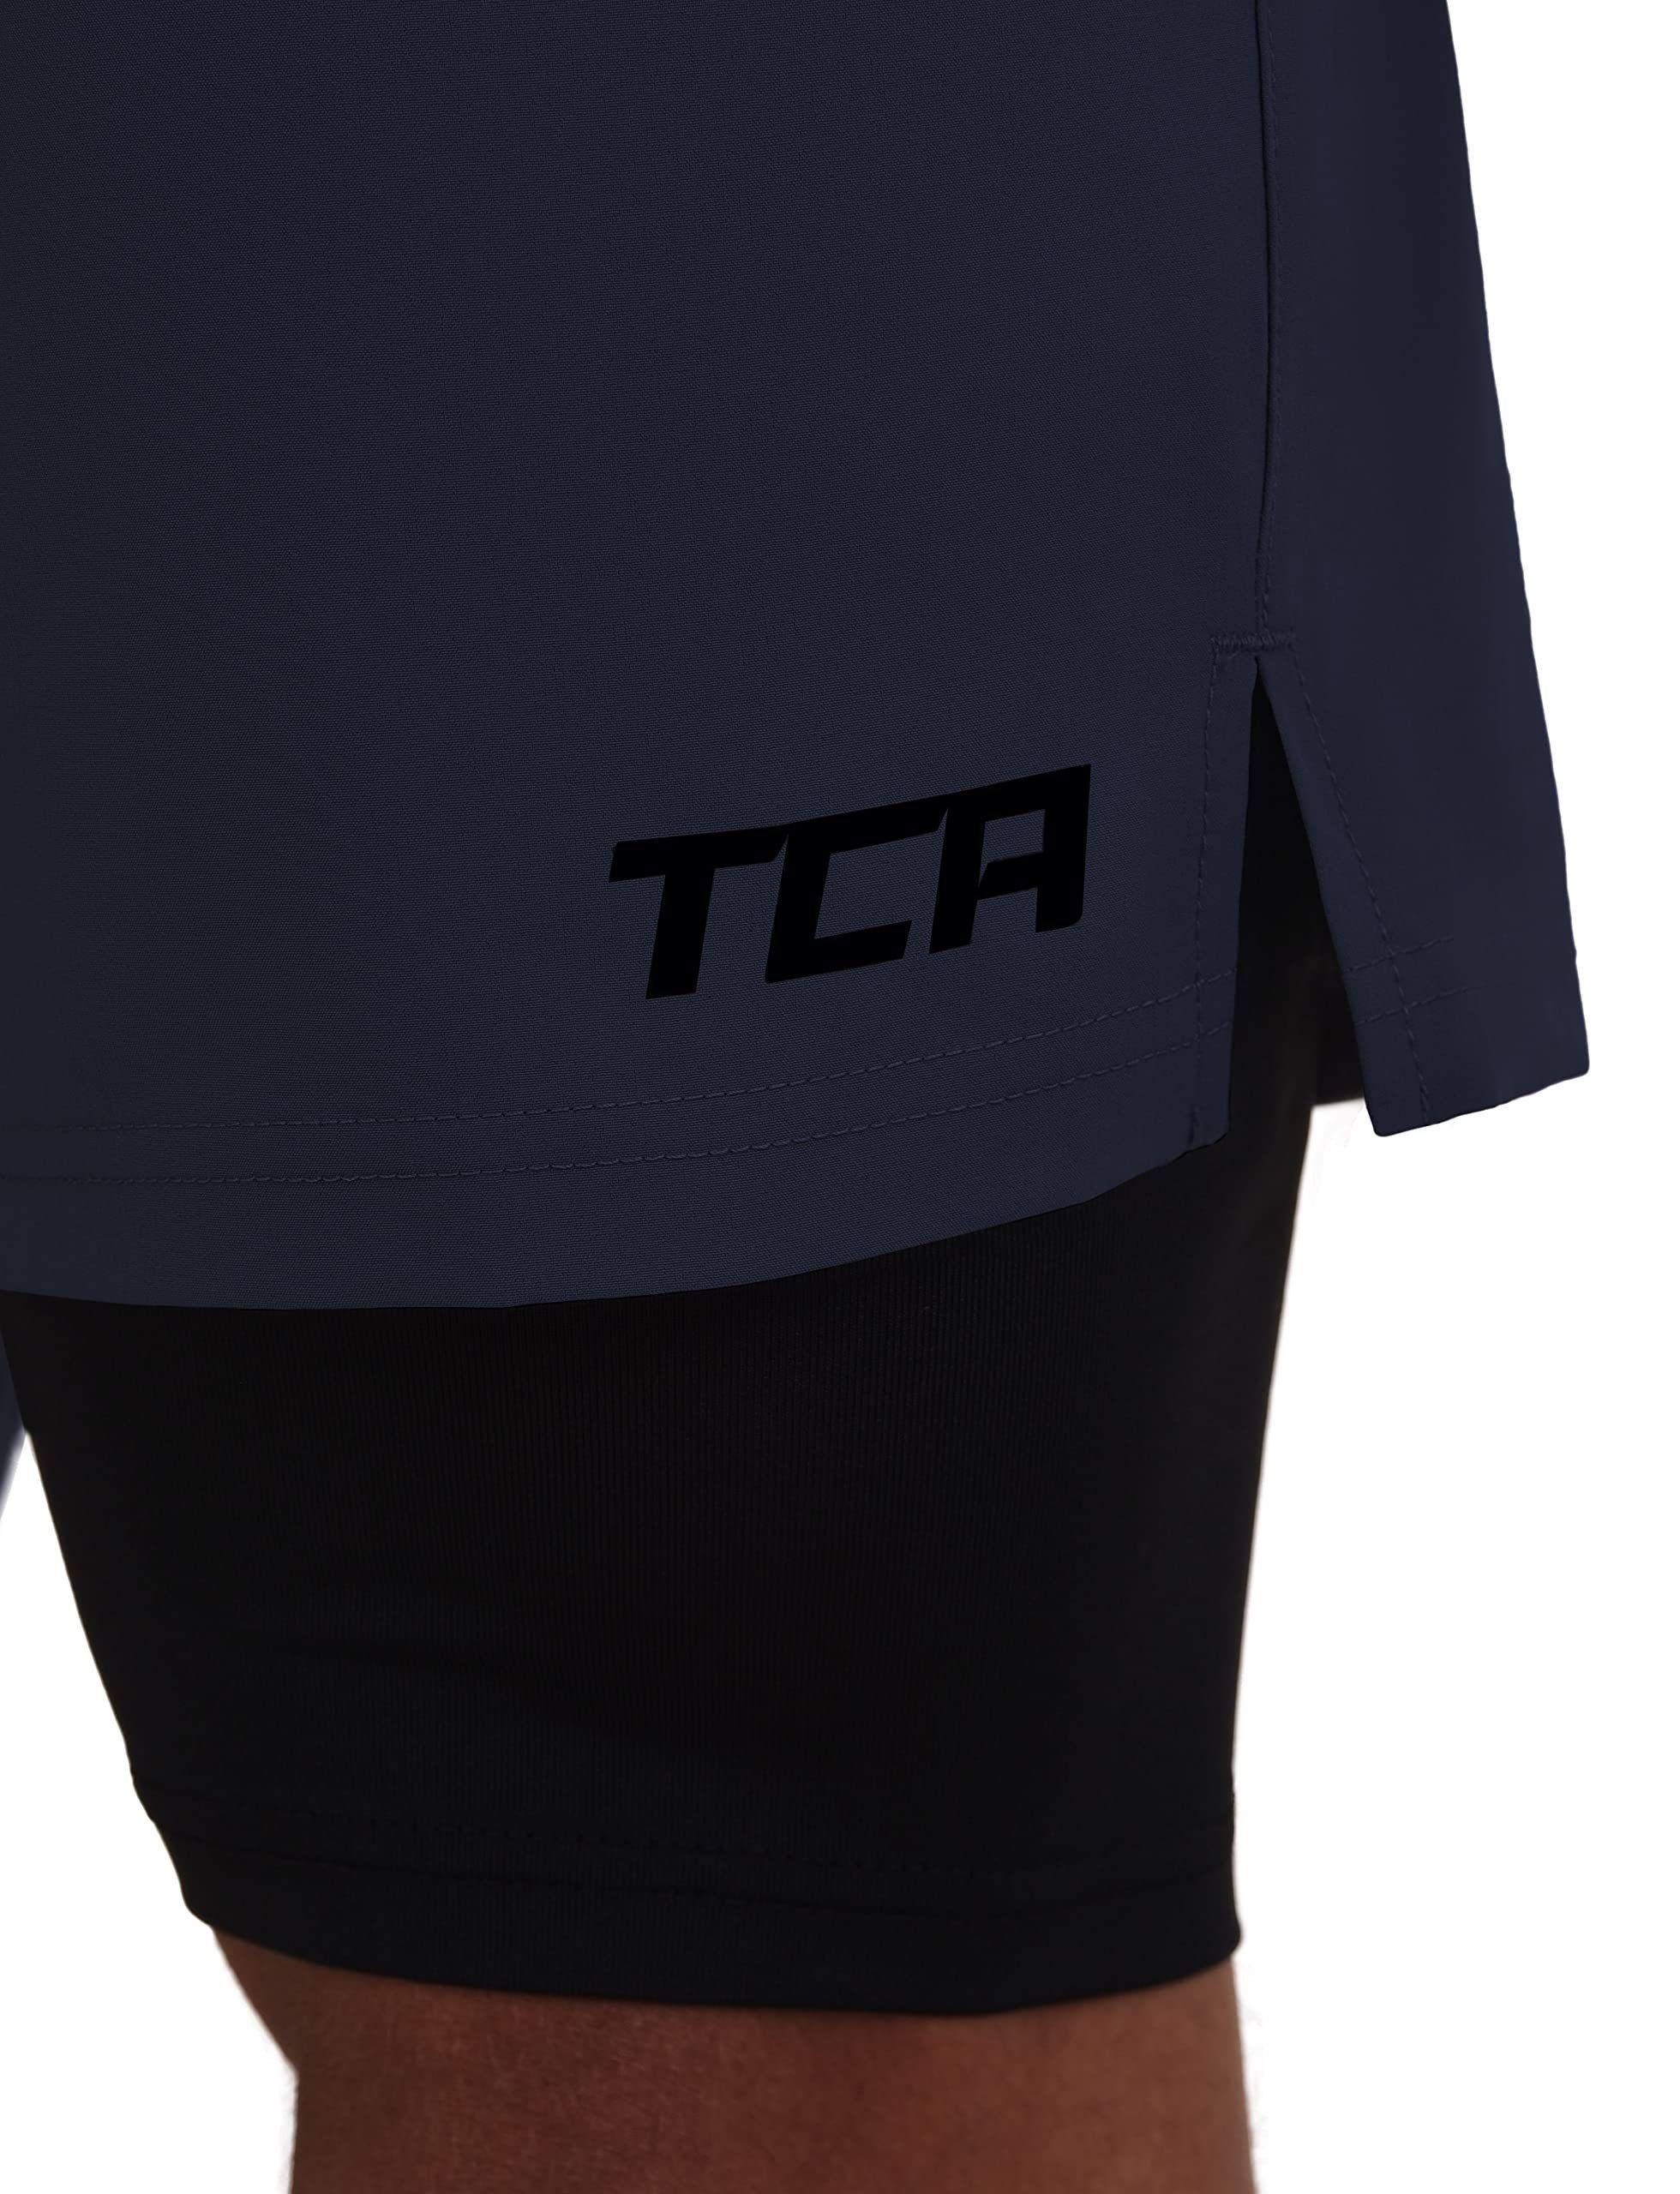 TCA 2 1 Trainingsshorts TCA in - Herren Dunkelblau/Schwarz Kompressionshose Laufhose mit